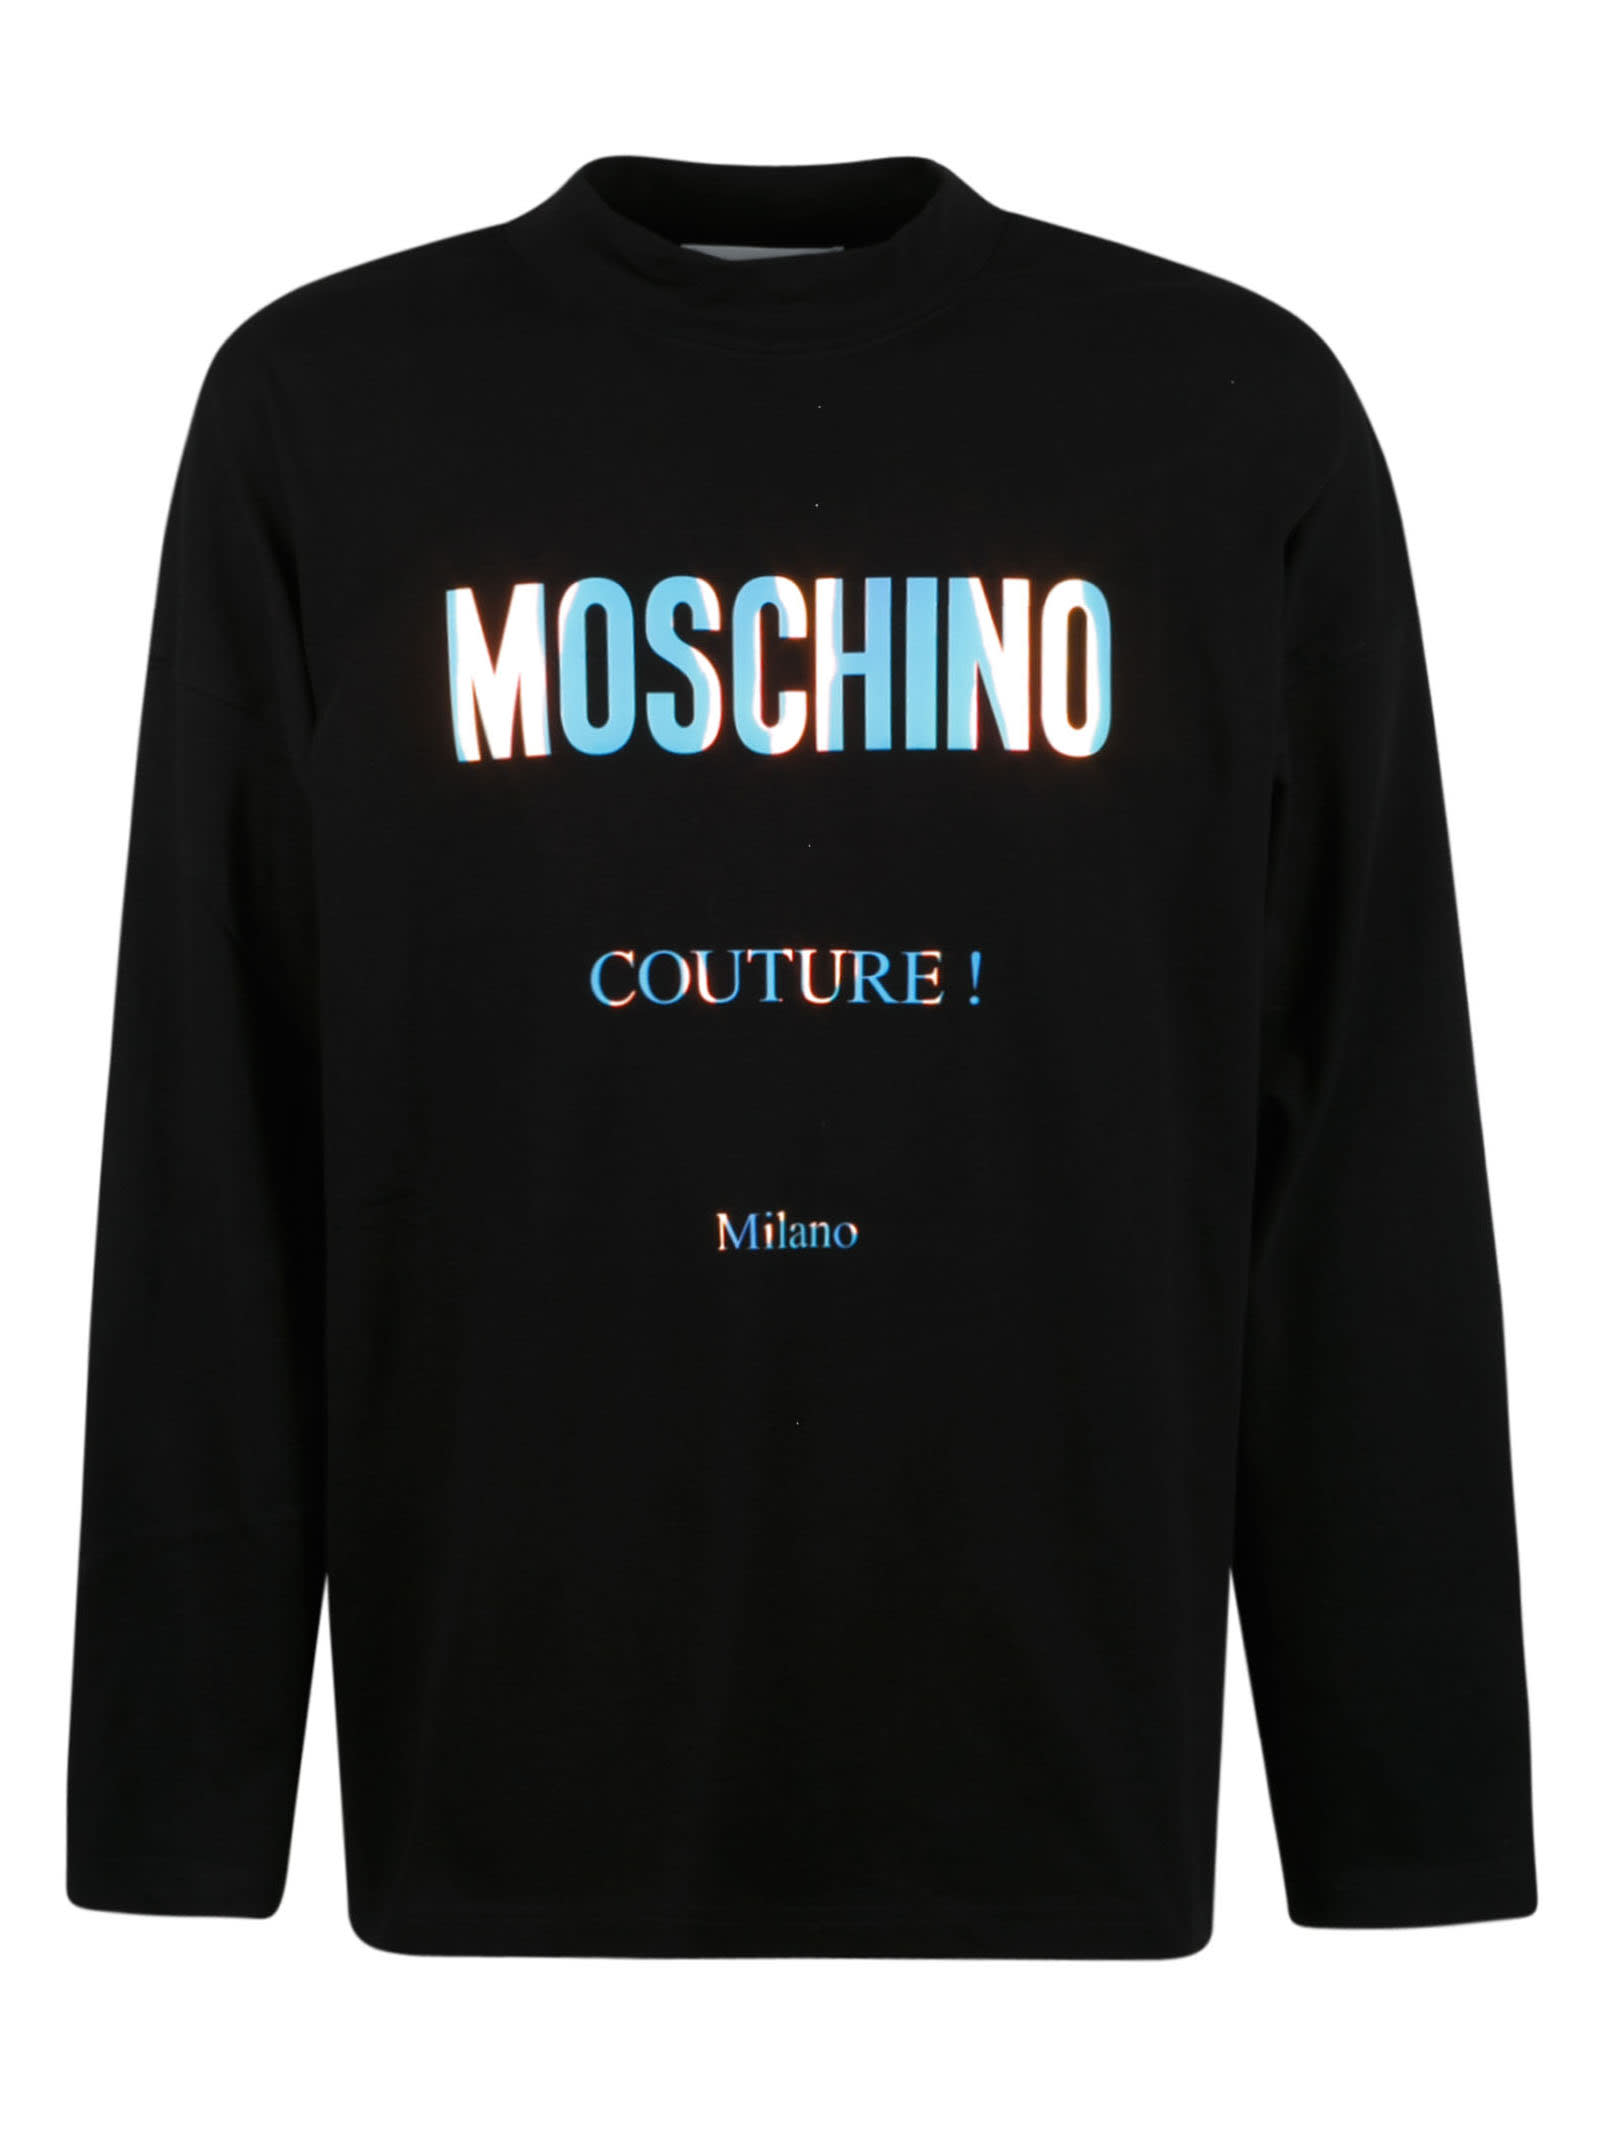 Moschino Couture! Sweatshirt